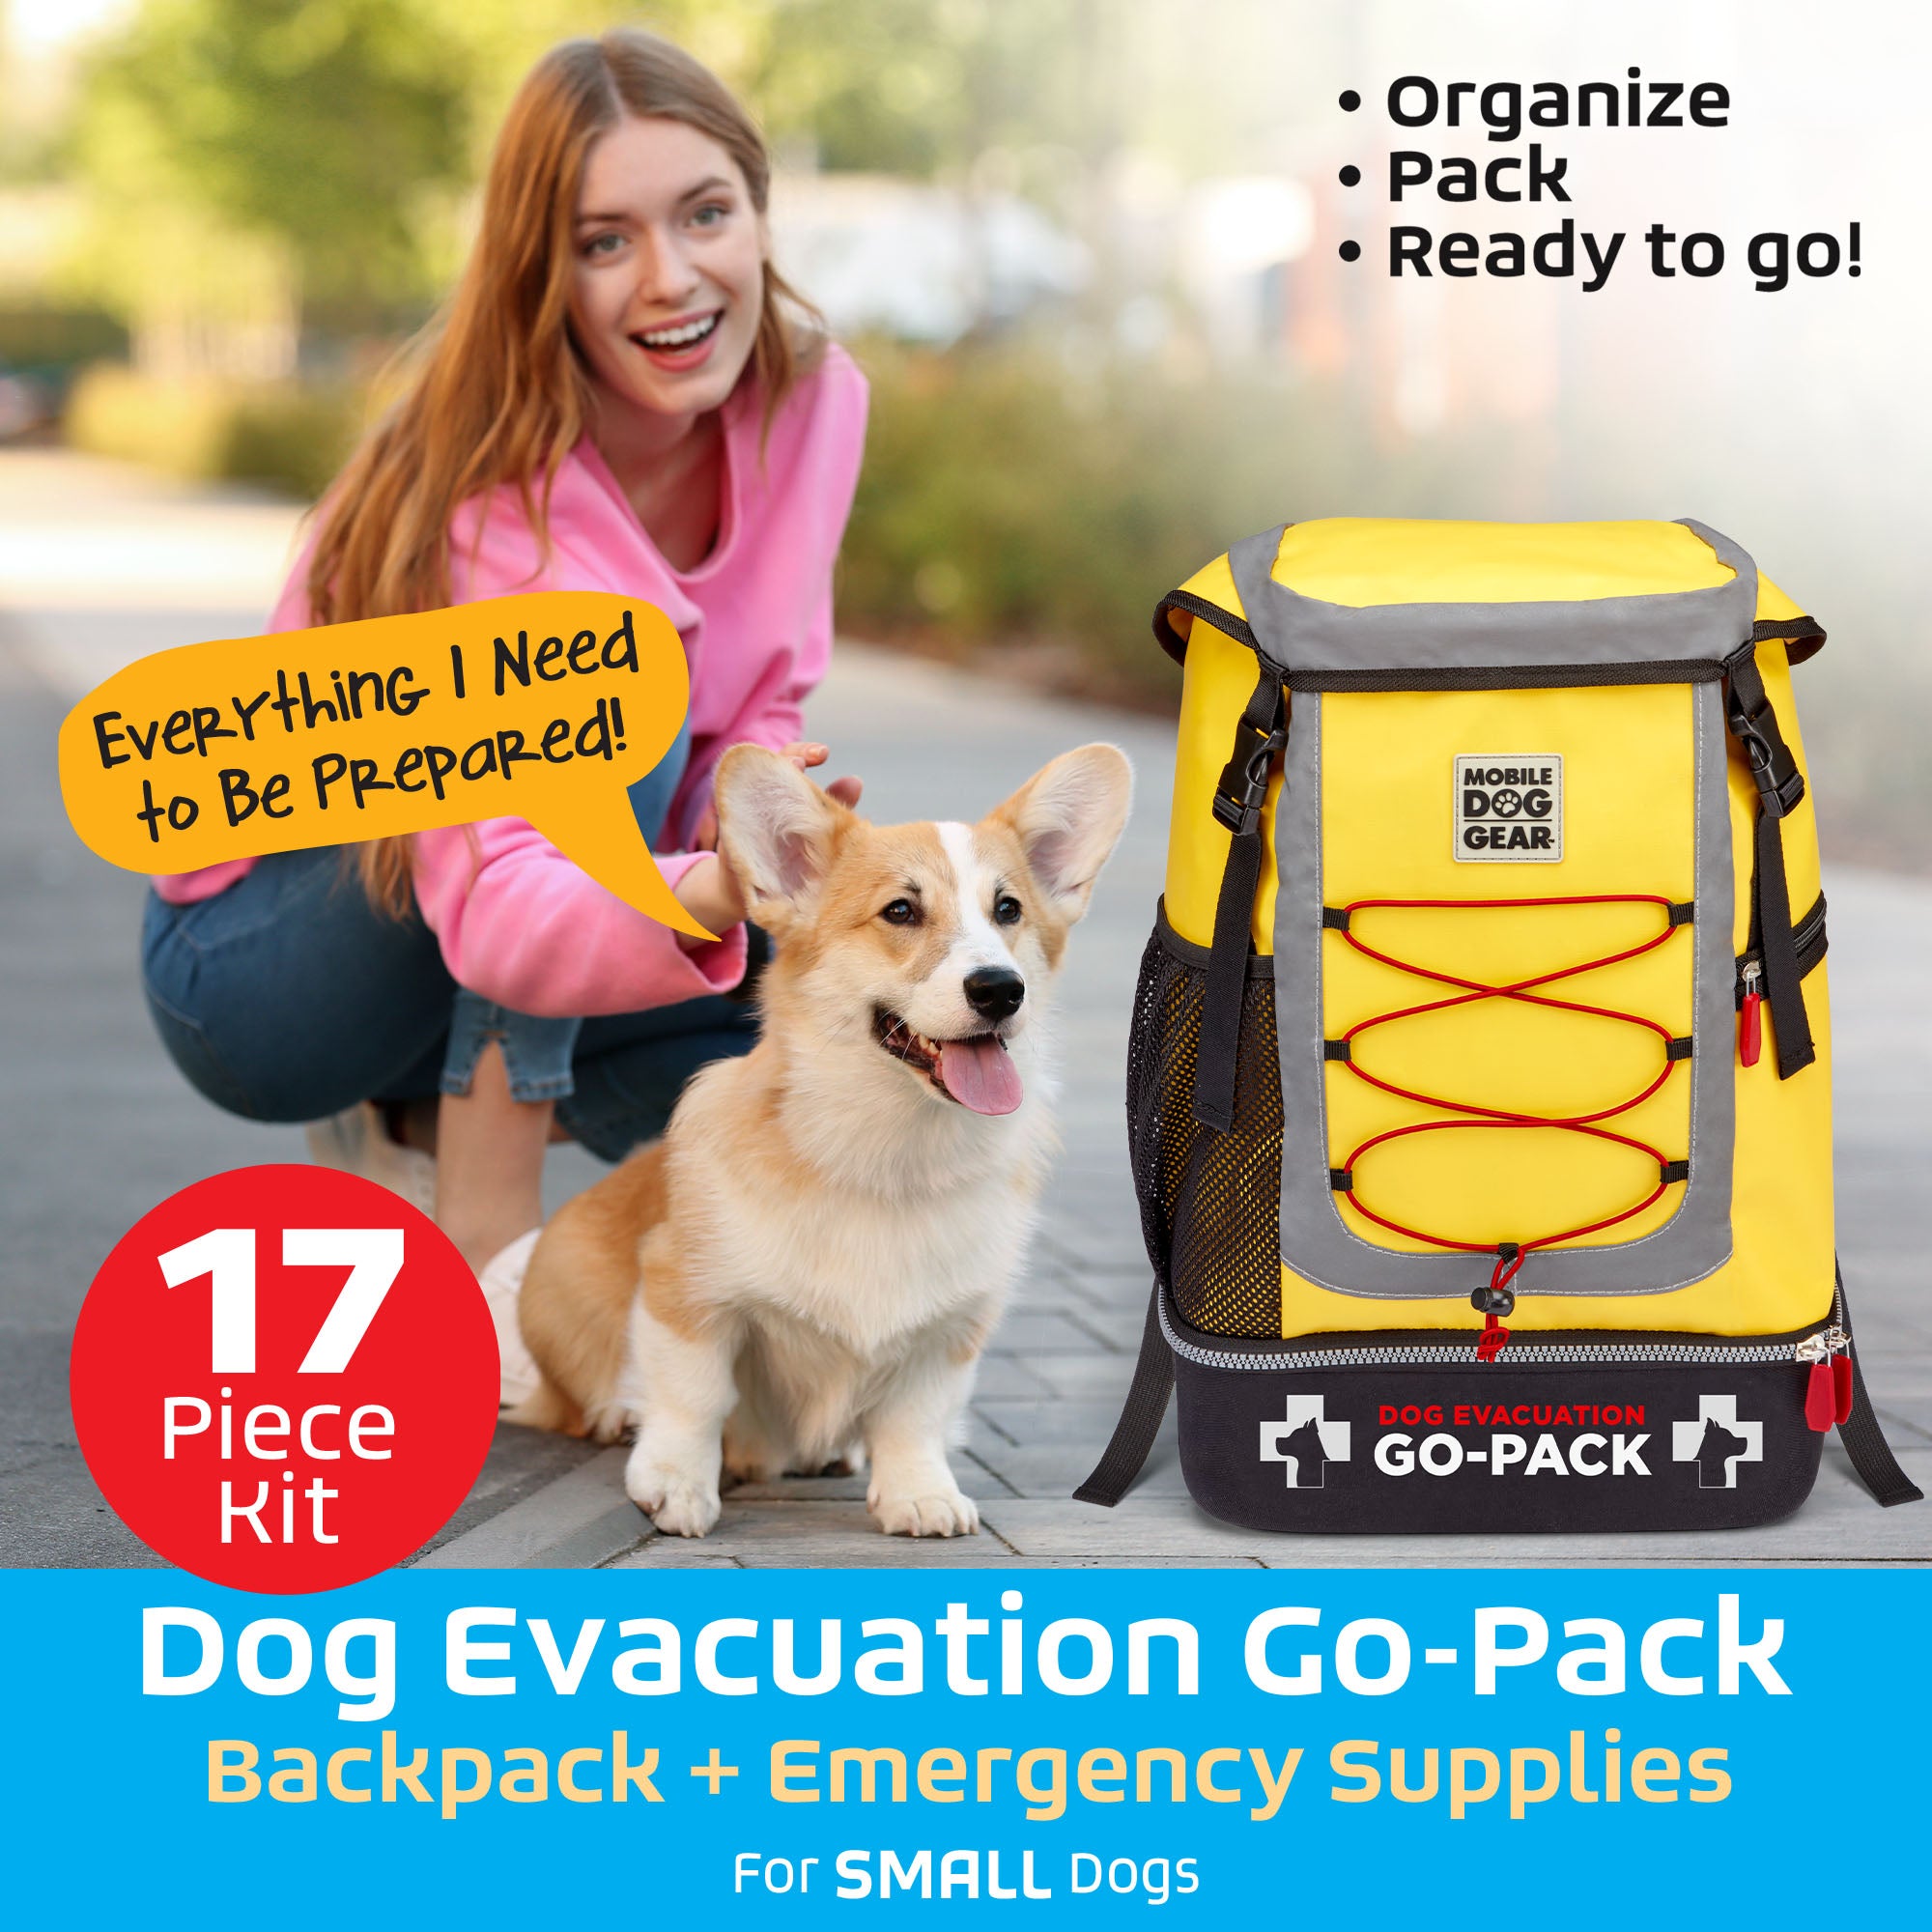 Mobile Dog Gear Dog Evacuation Go-Pack (Small)